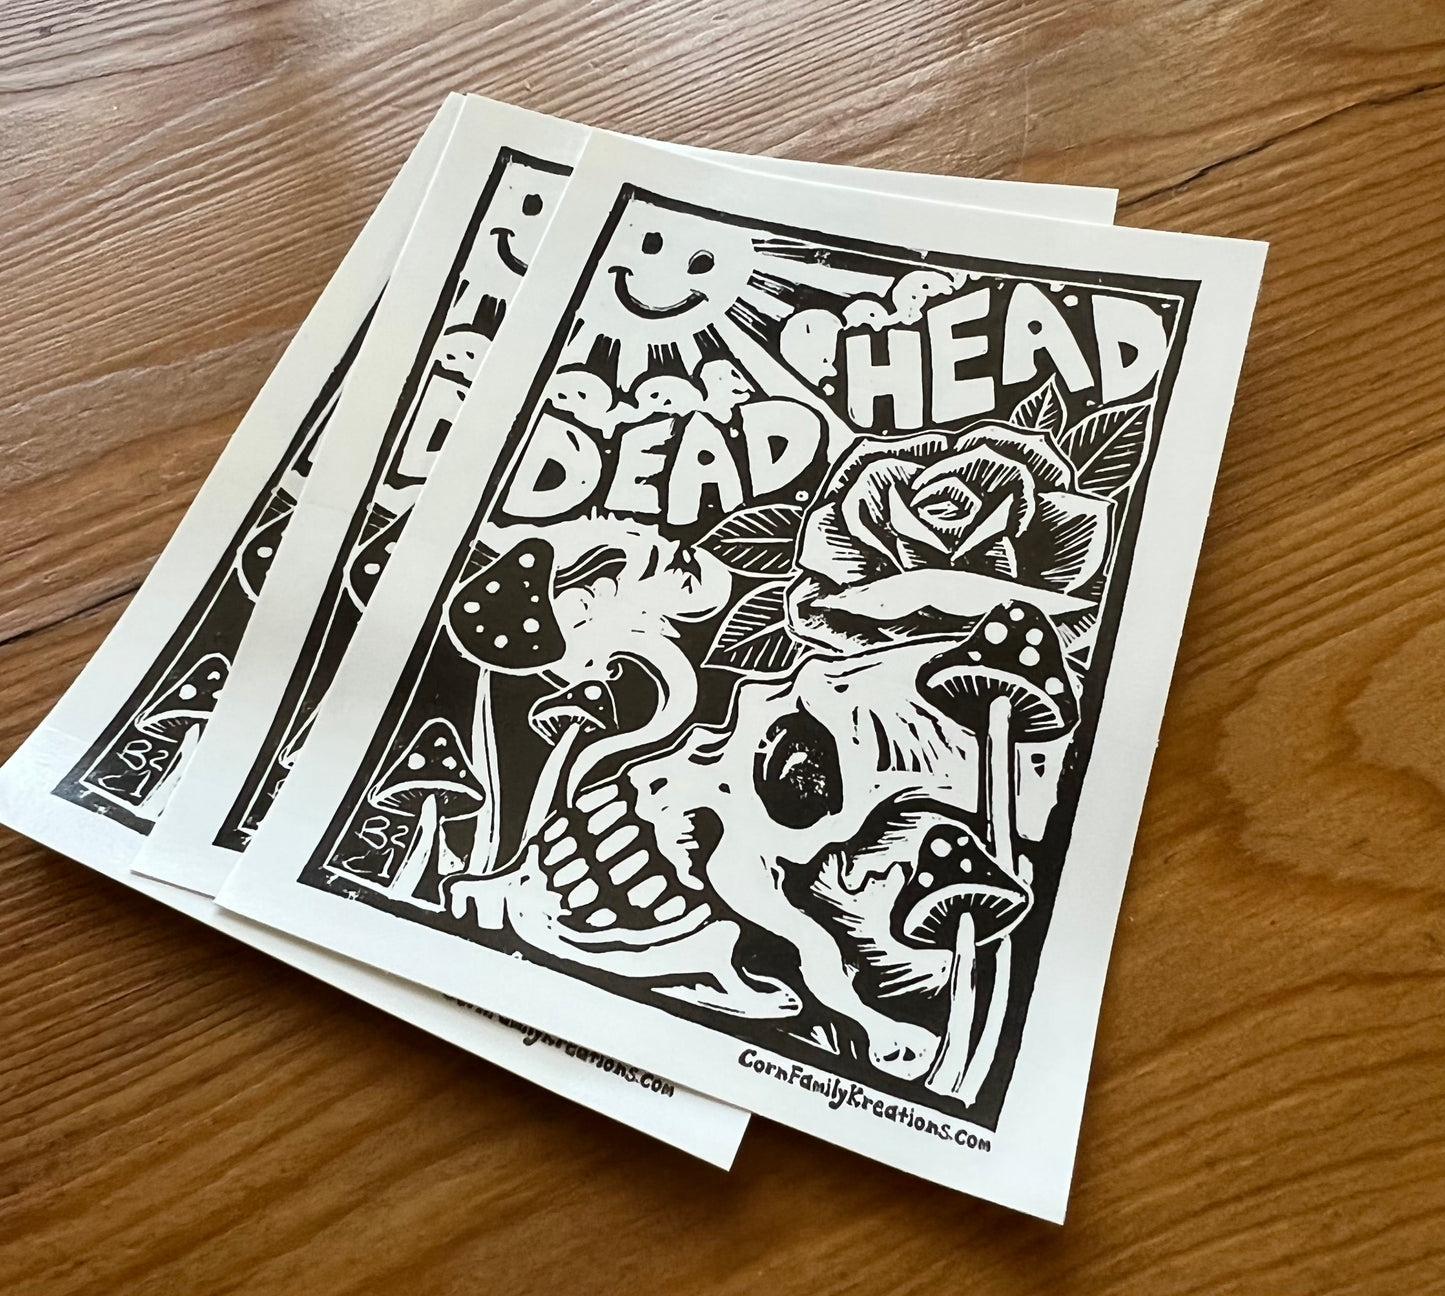 Deadhead stamp sticker